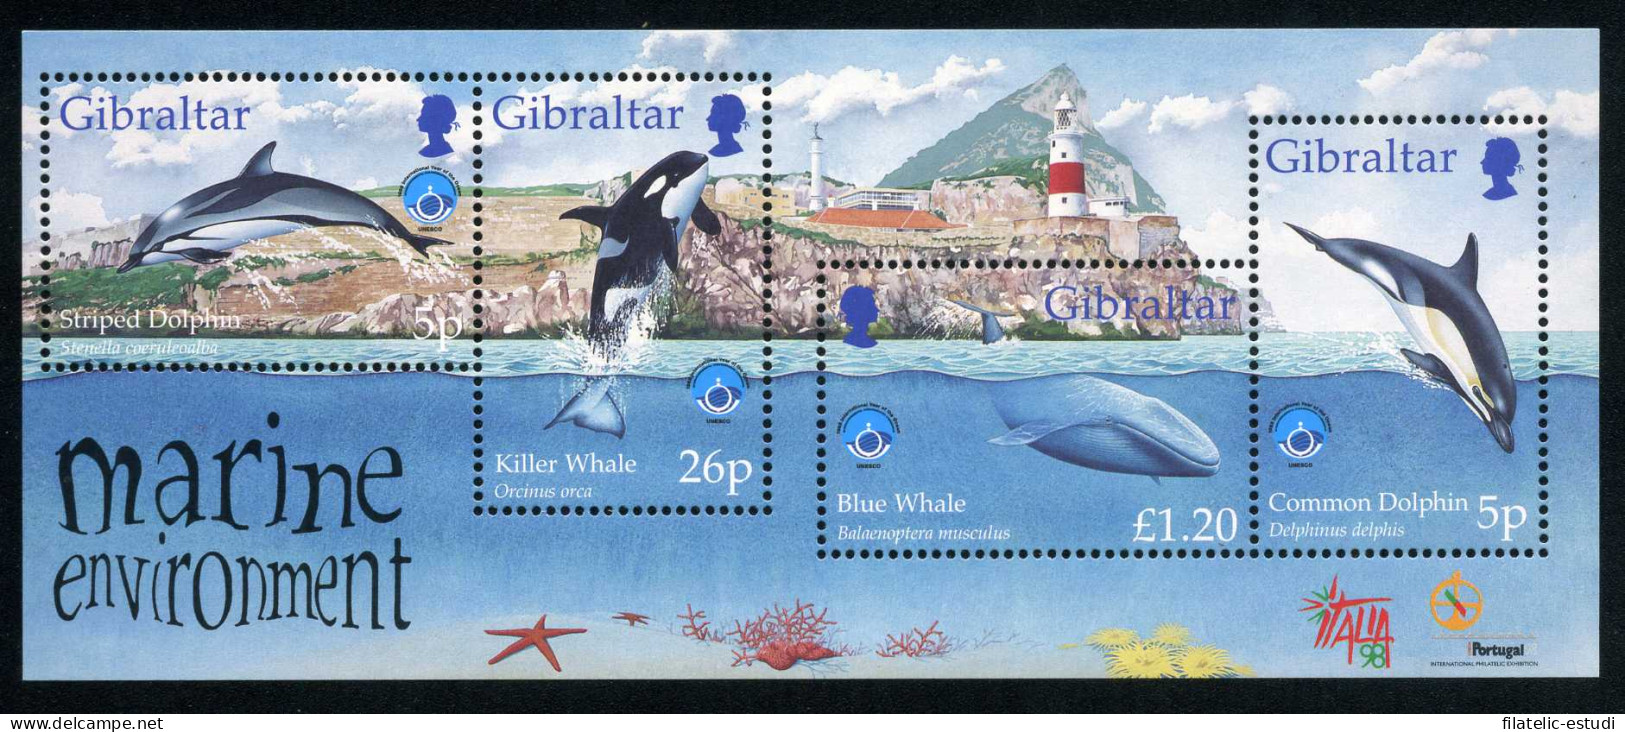 Gibraltar - Nº HB 32 1998 Año Inter. De Los Océanos Fauna Animales Marinos Luj - Gibraltar